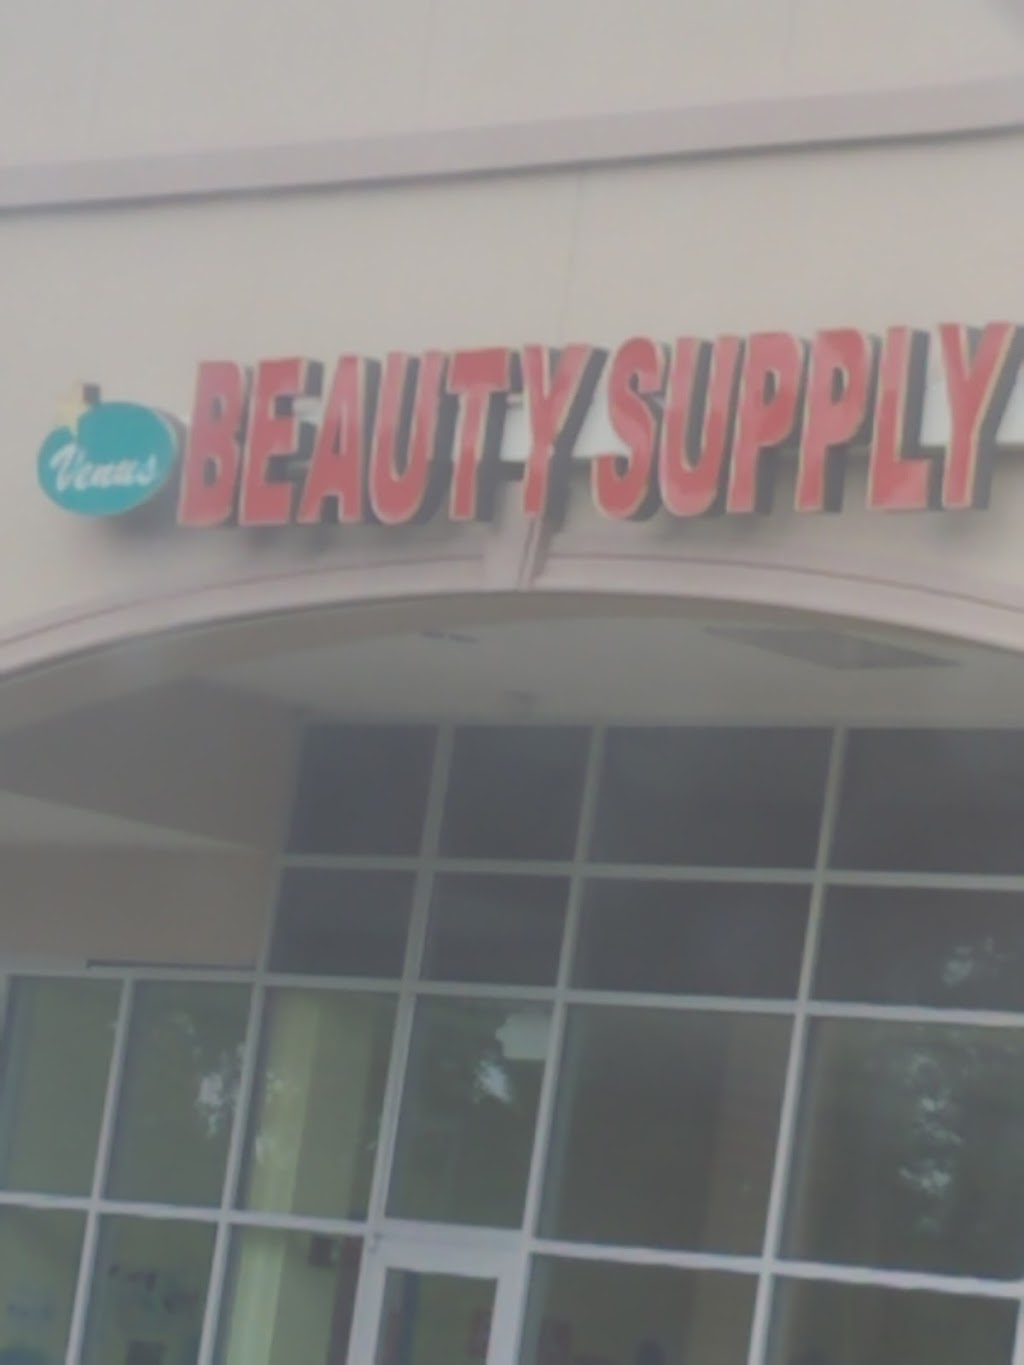 Venus Beauty Supply | 483 Woodlane Rd # 7, Mt Holly, NJ 08060 | Phone: (609) 877-5575